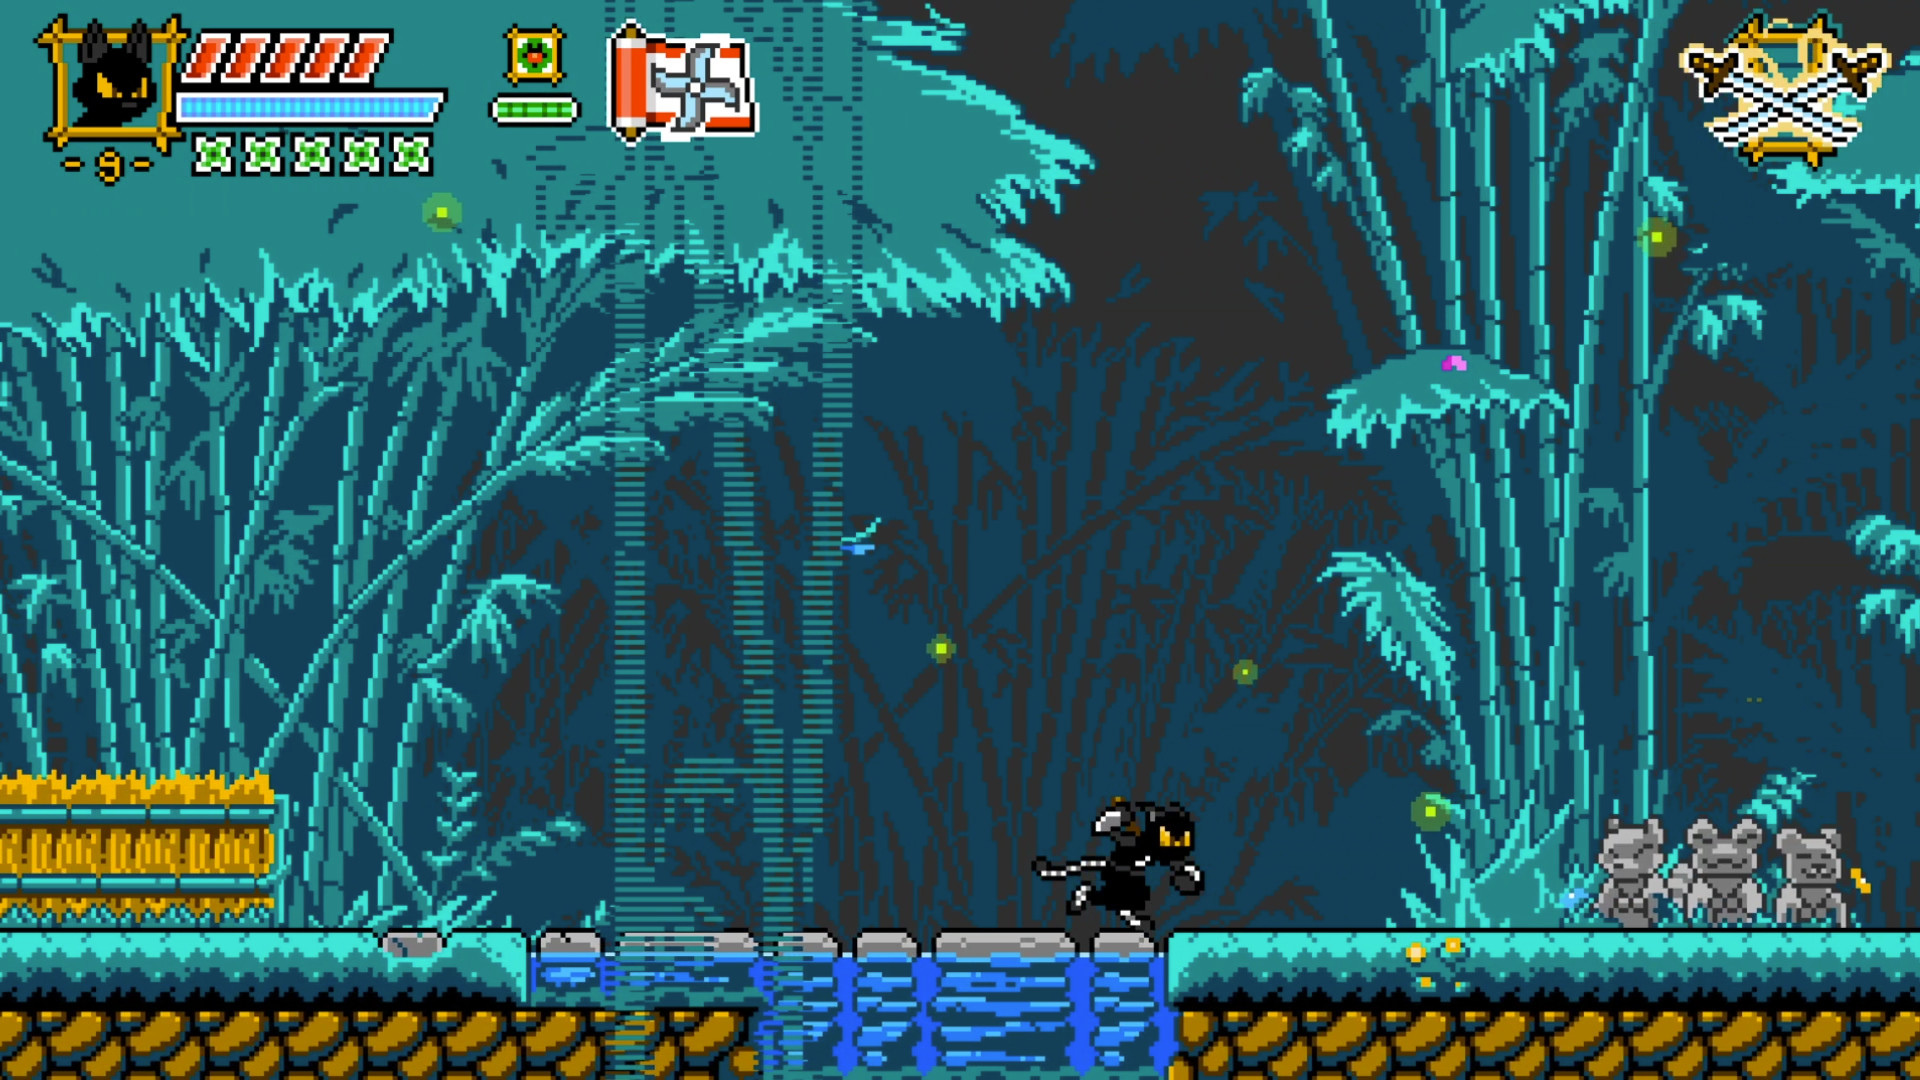 Jogo Ninja Cat Exploit no Jogos 360